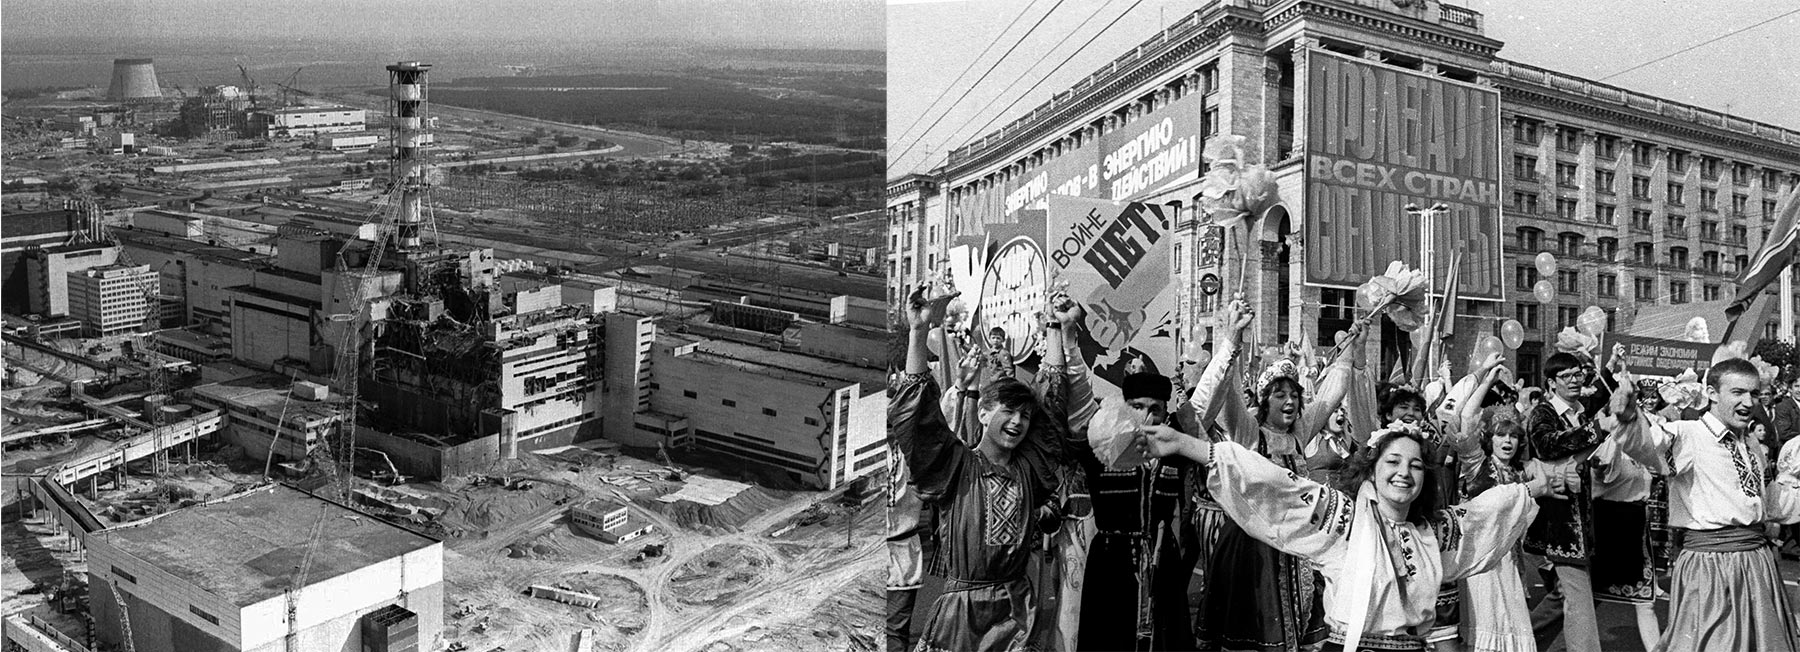 Chernobyl Disaster and Post-Chernobyl Parade